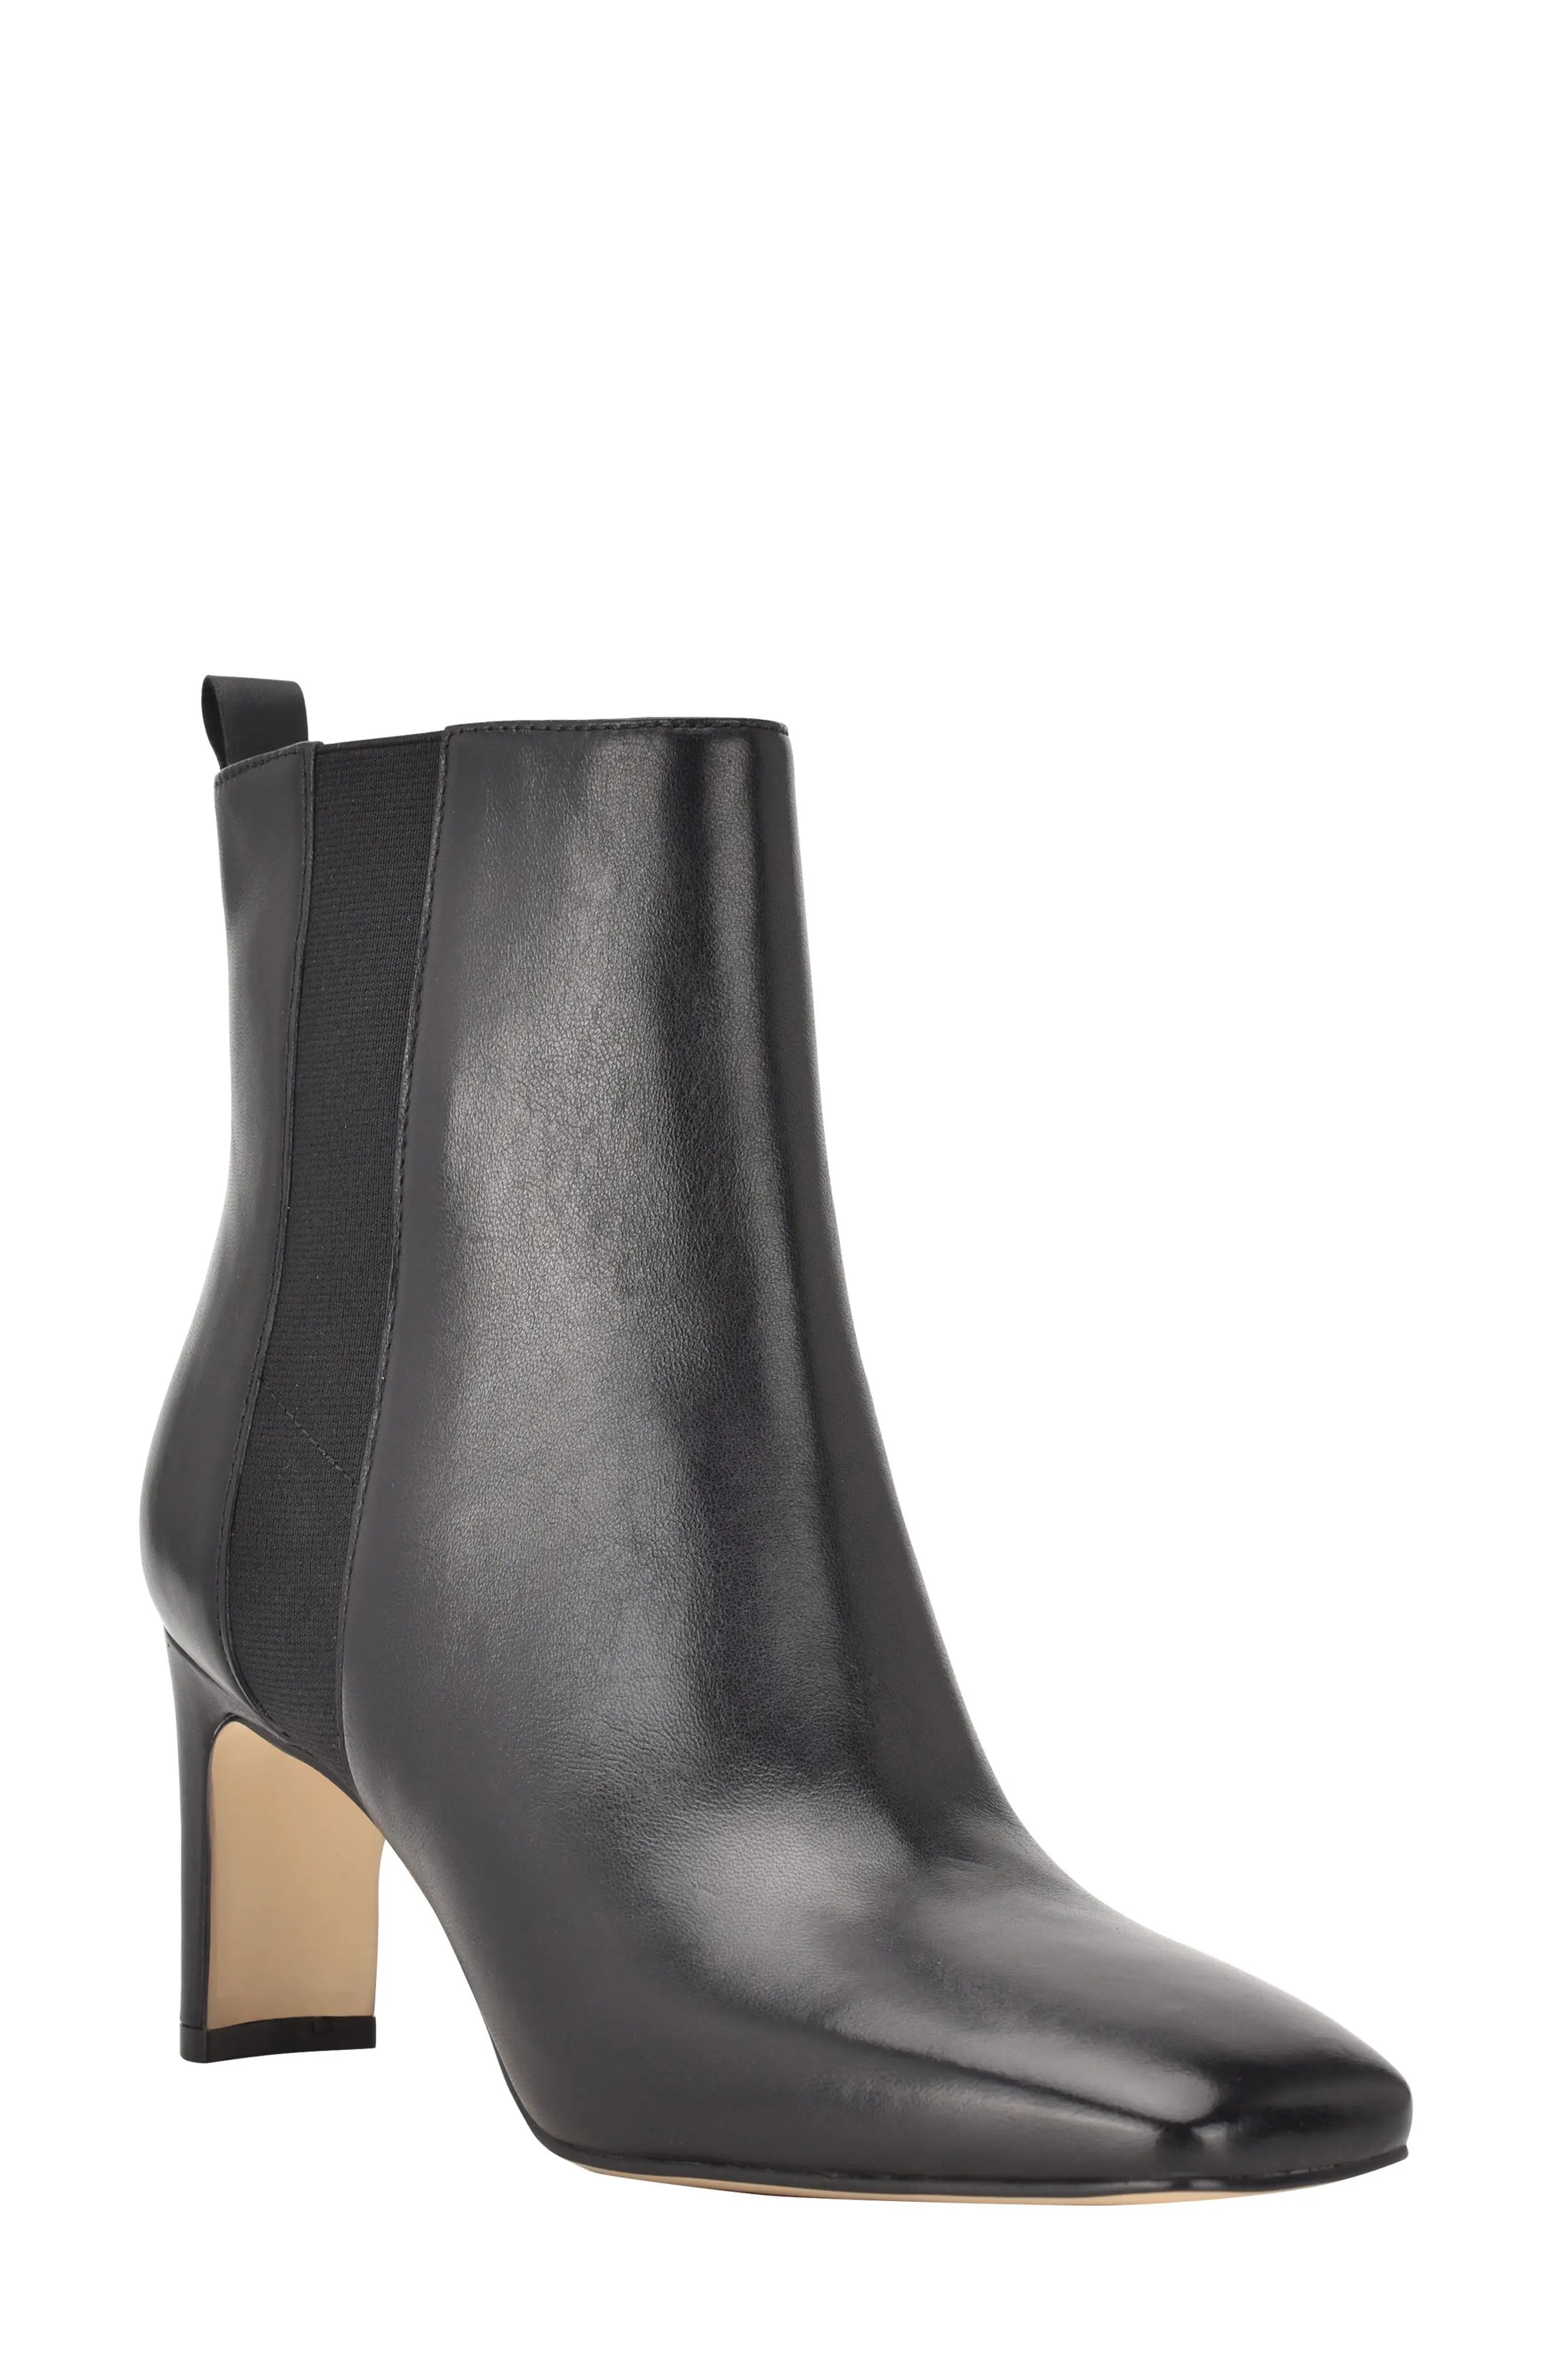 Calvin Klein Cassia Square Toe Boot in Black at Nordstrom, Size 8 | Nordstrom